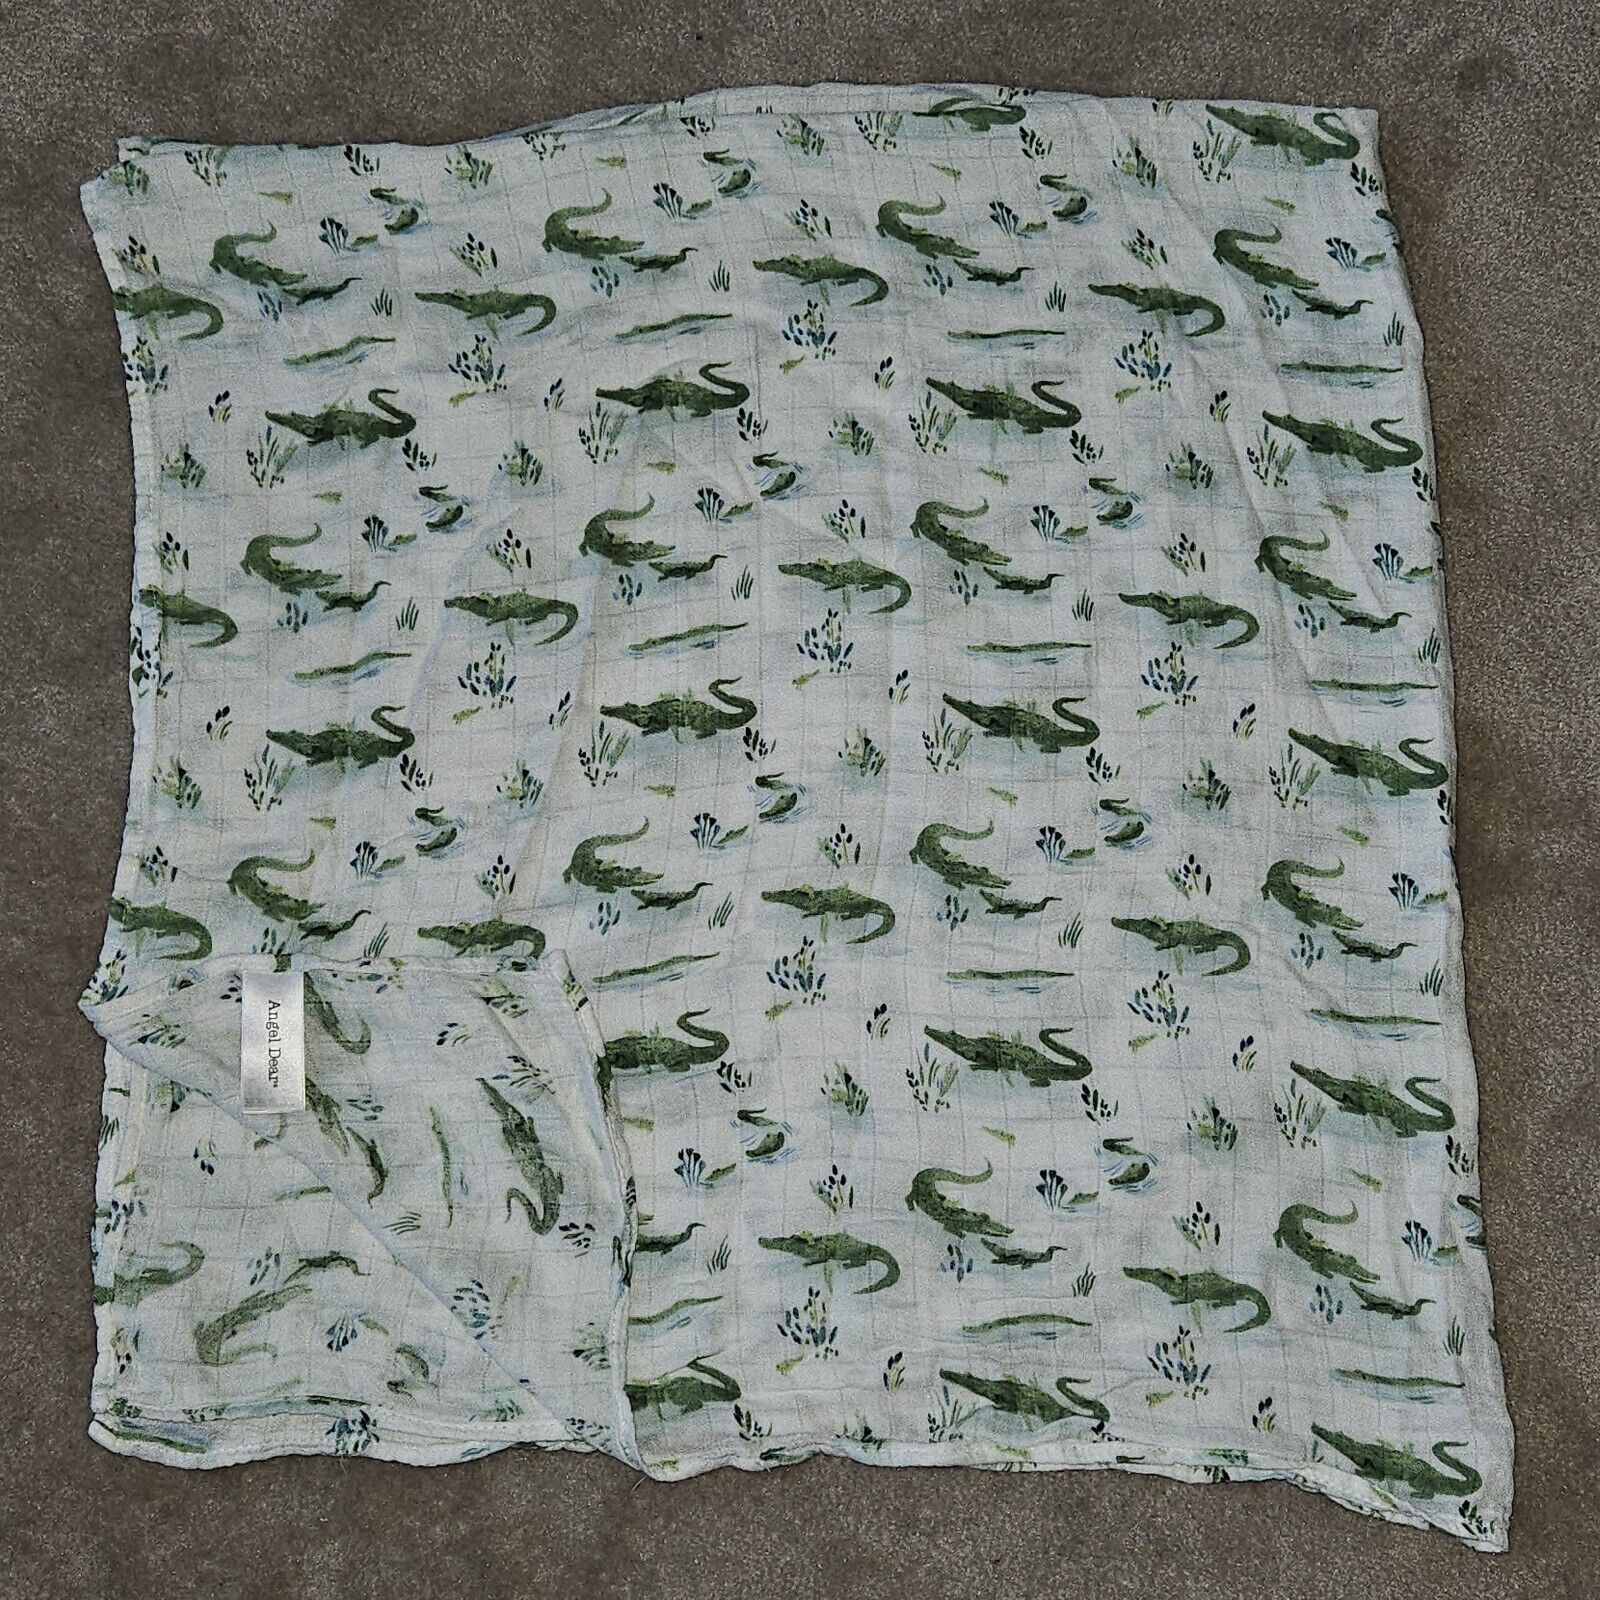 Angel Dear Alligator Crocodile Muslin Swaddle Blanket Green White 47x47 - $29.65